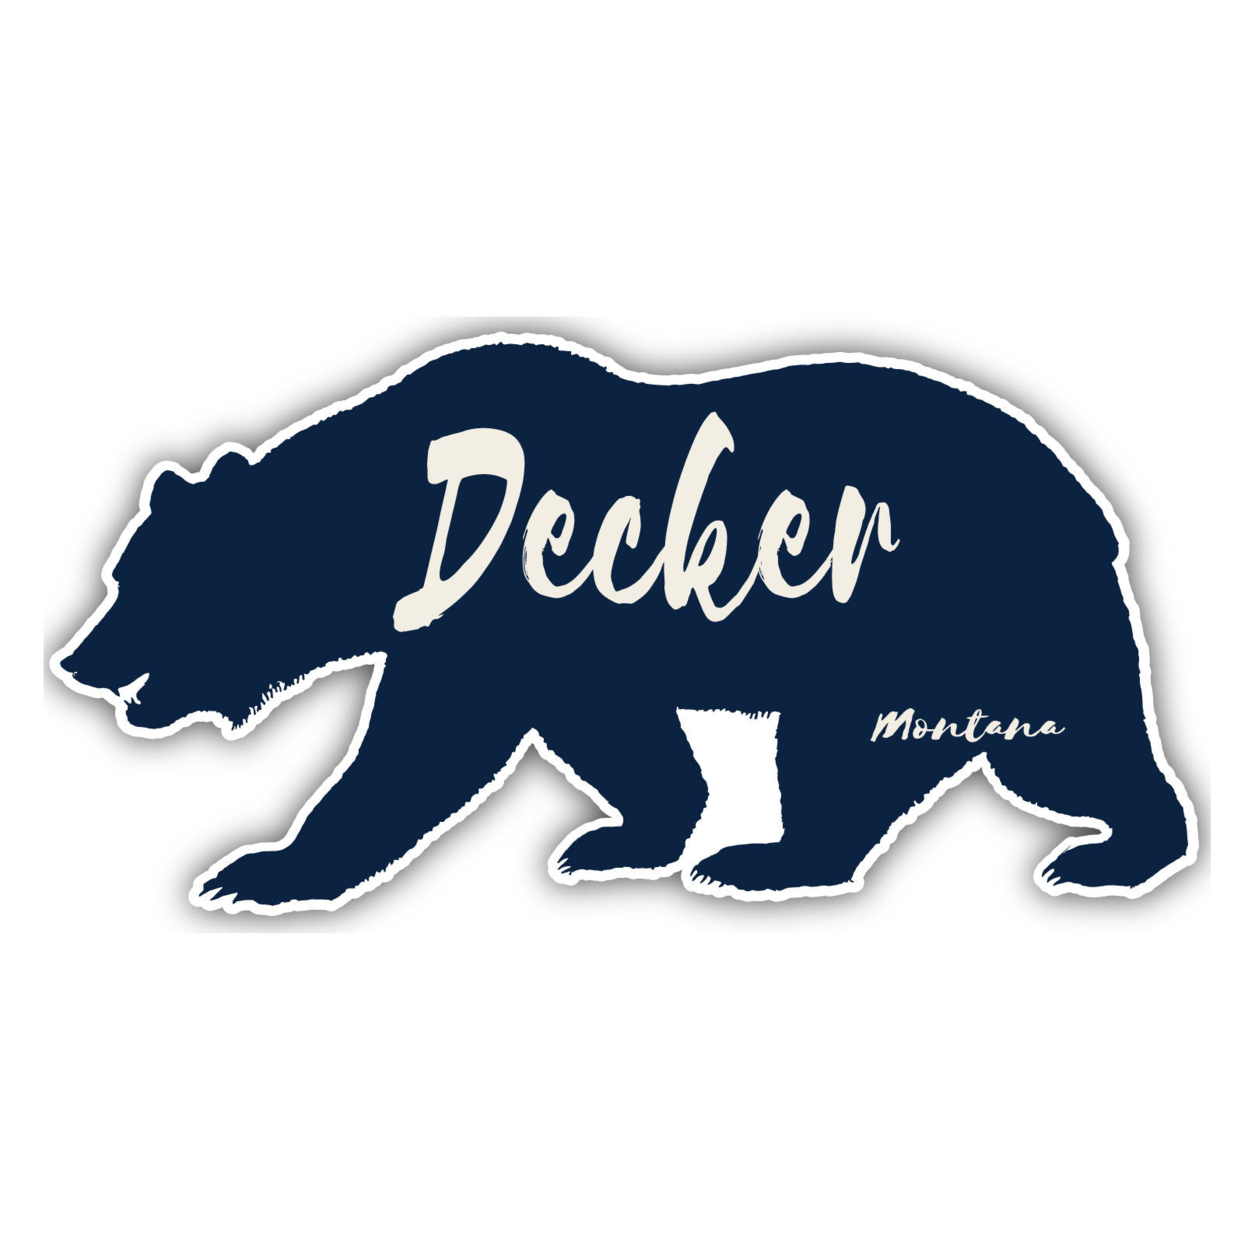 Decker Montana Souvenir Decorative Stickers (Choose Theme And Size) - Single Unit, 12-Inch, Bear